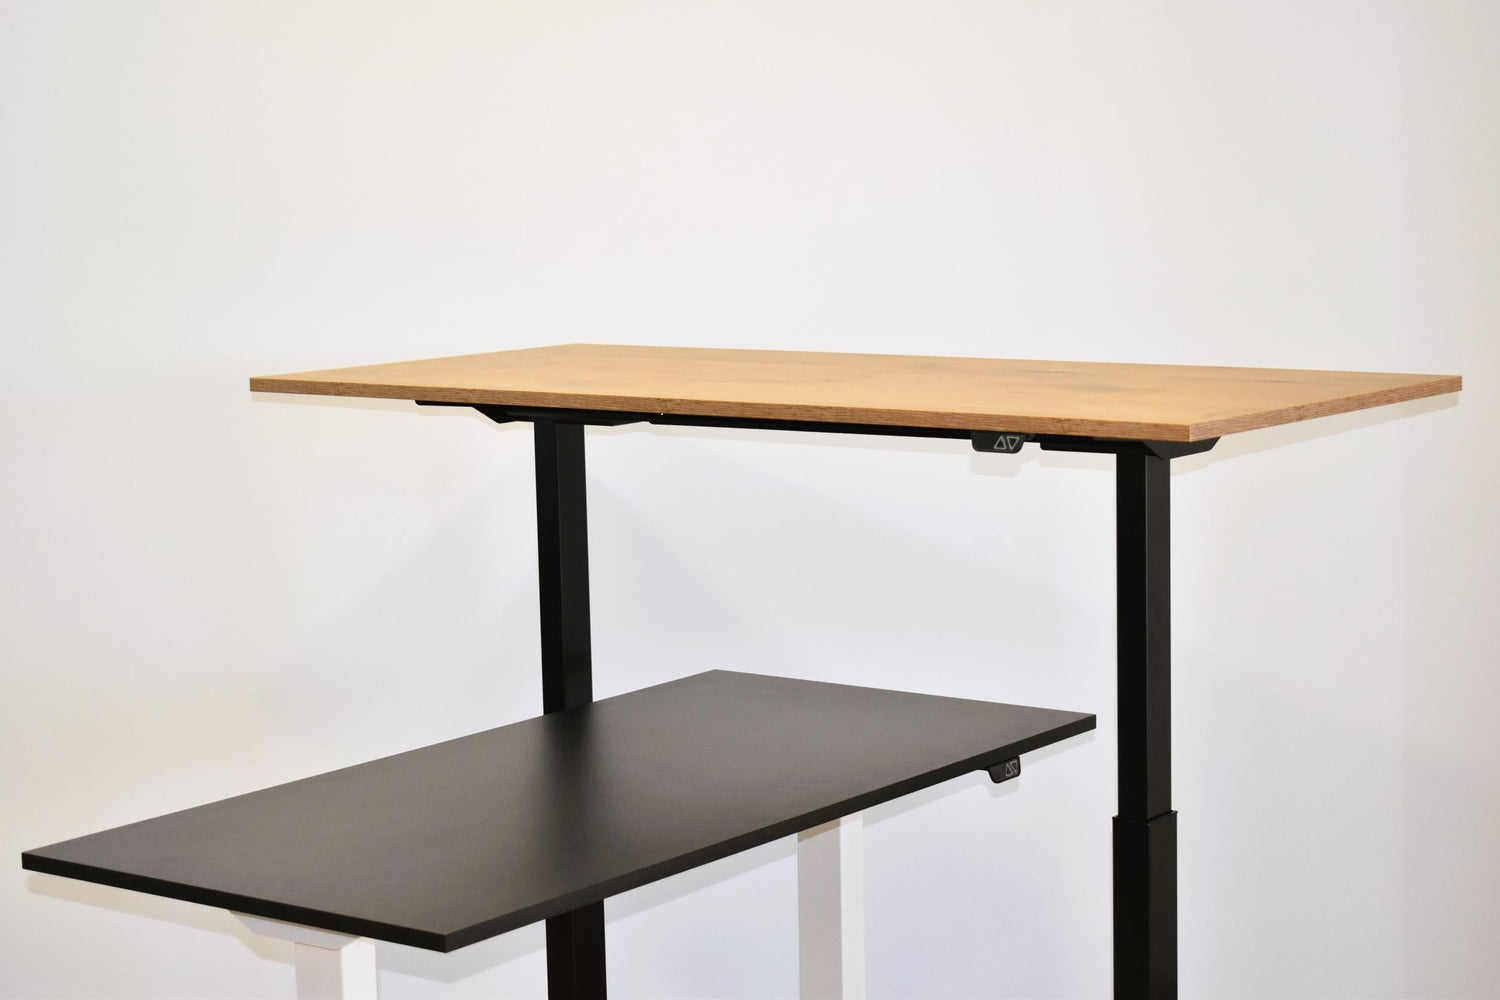 Two height adjustable desks